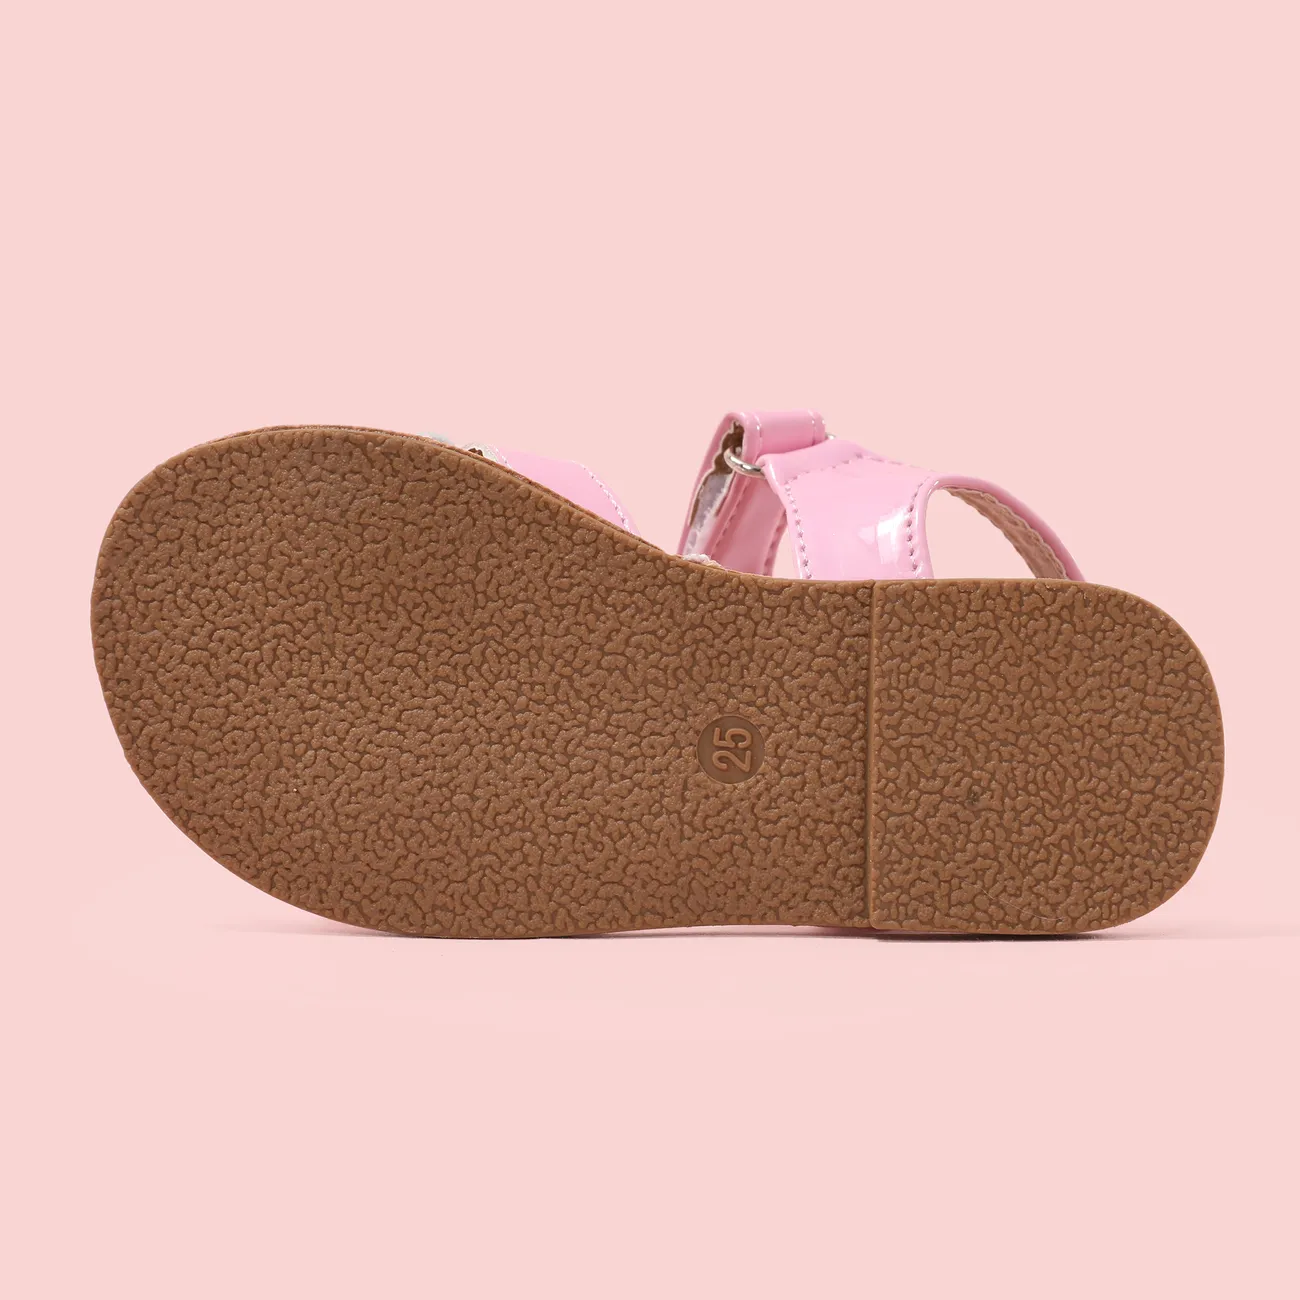 Toddler/Kid Girl Stylish Shining Flower Applique Velcro Closure Sandals Pink big image 1